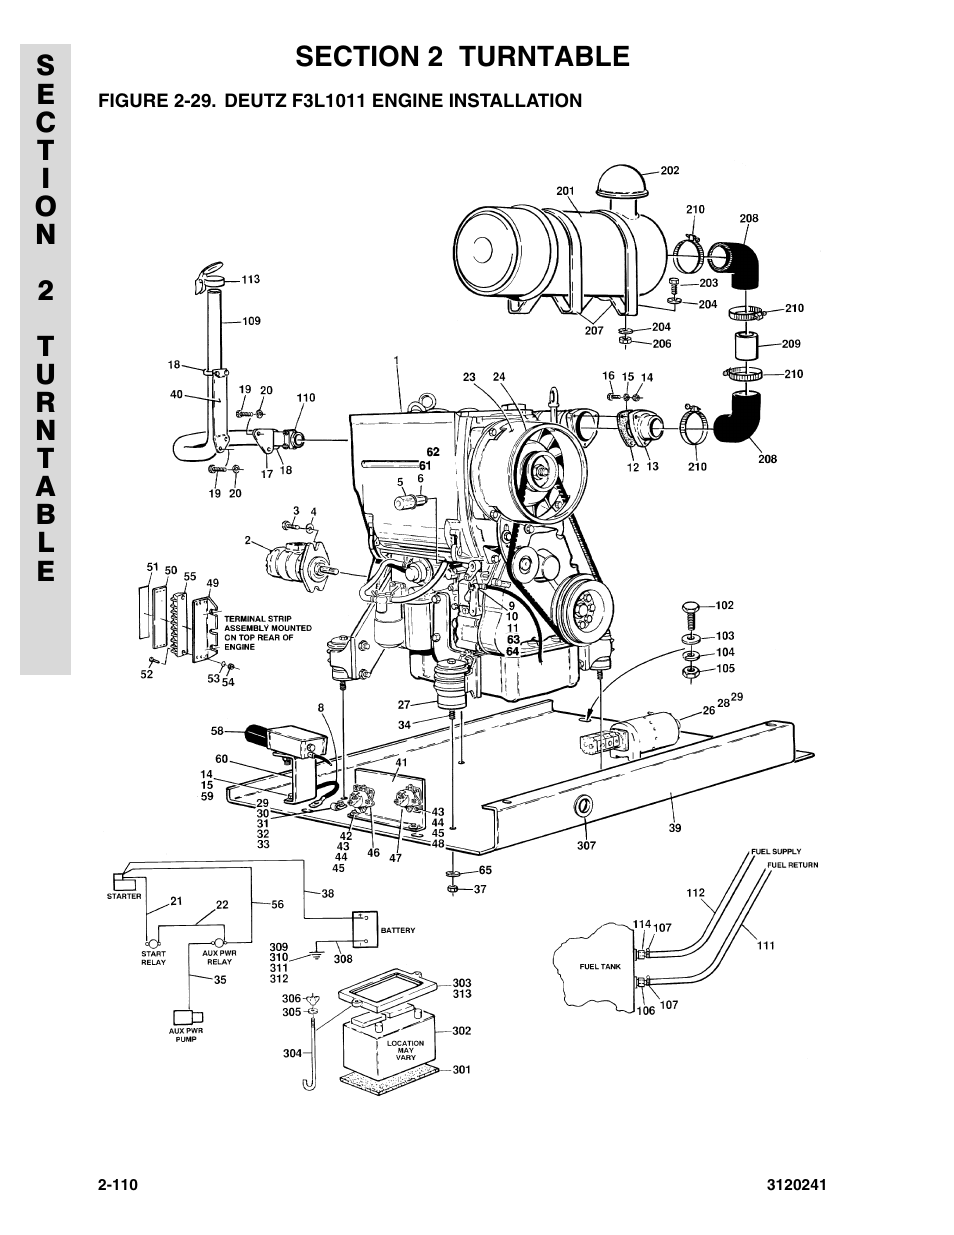 Figure 2-29. deutz f3l1011 engine installation | JLG 40H Parts Manual